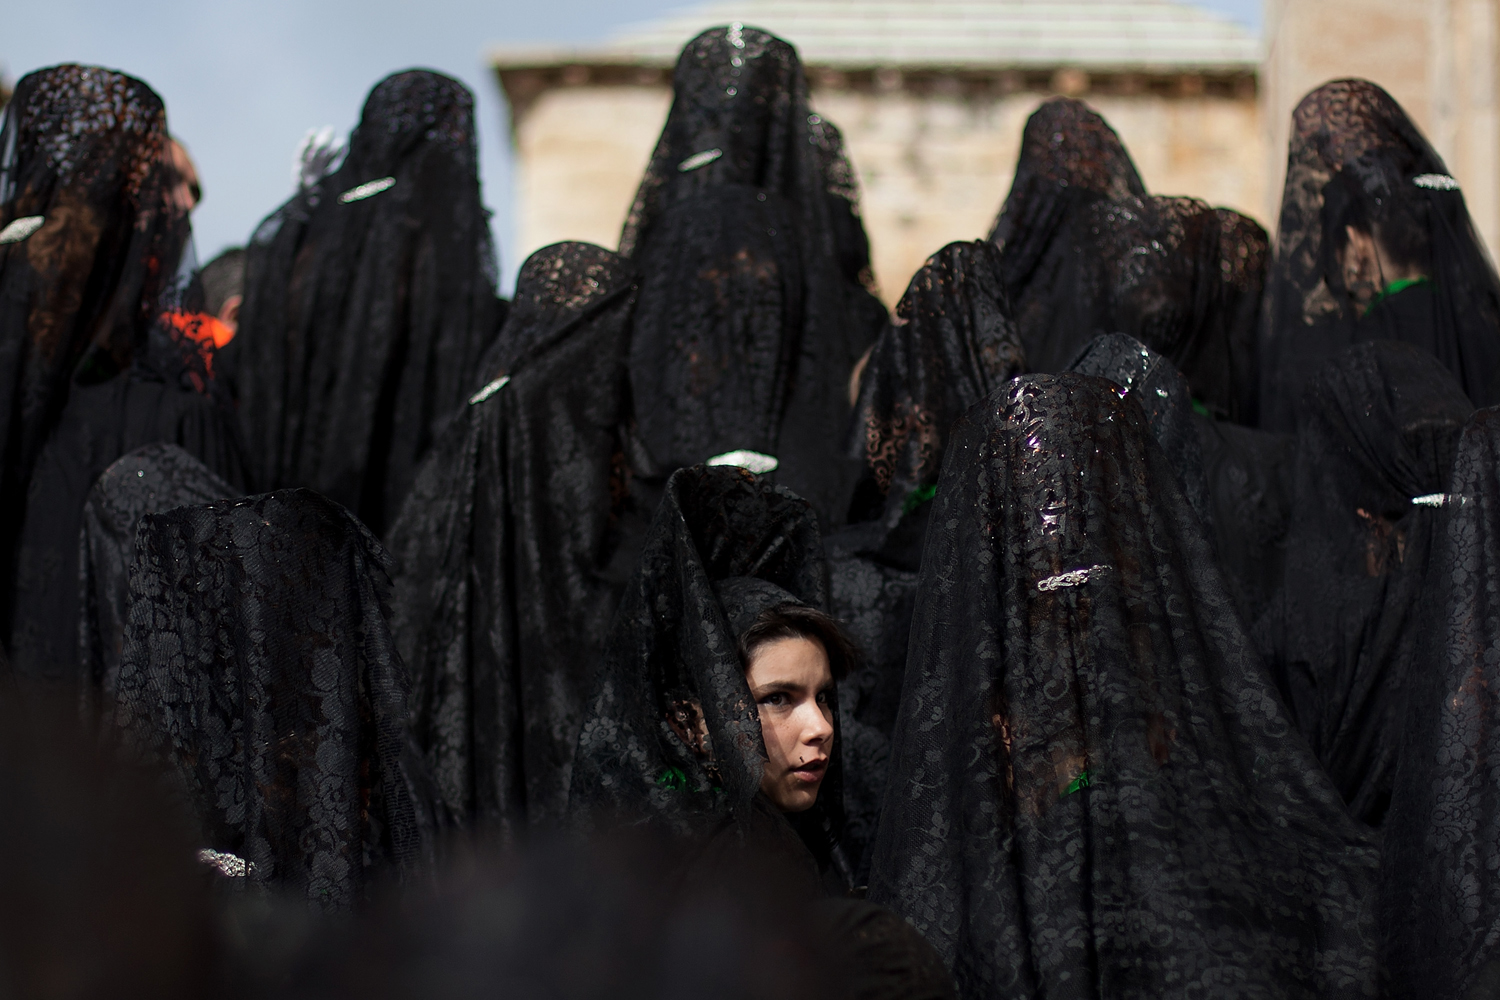 March 28, 2013. A penitent looks back as she and others wear mantillas, ahead of the Holy Week procession of the Cofradia de la Virgen de la Esperanza in Zamora, Spain.